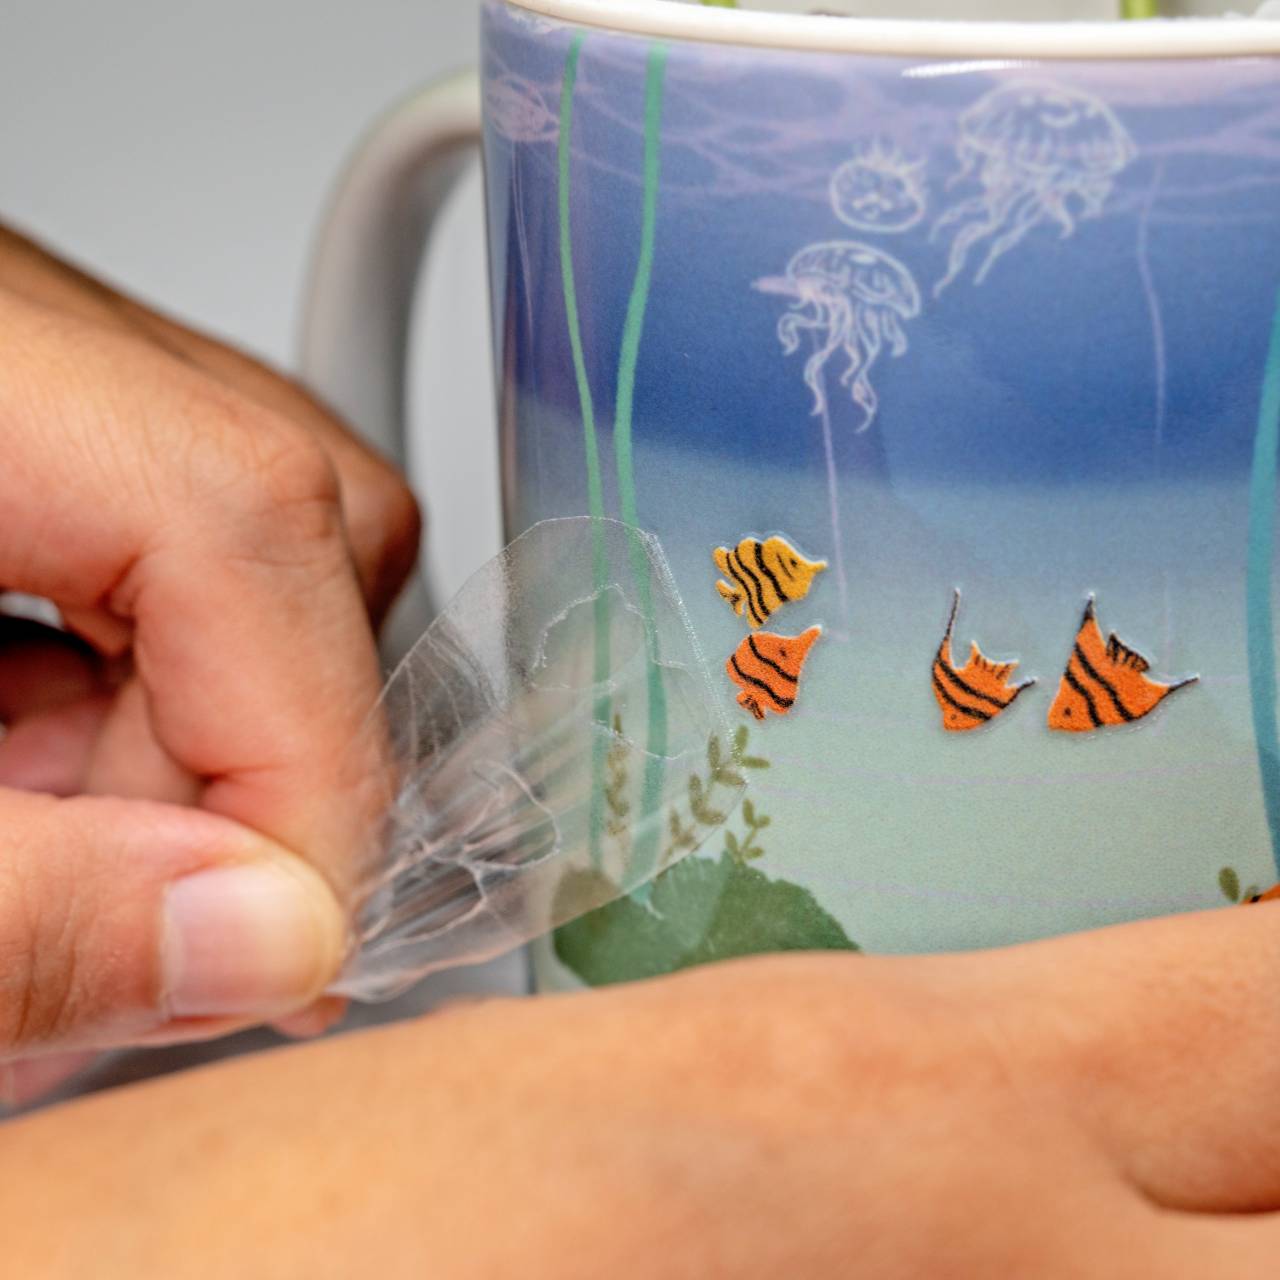 hydroponic plant mug content 3